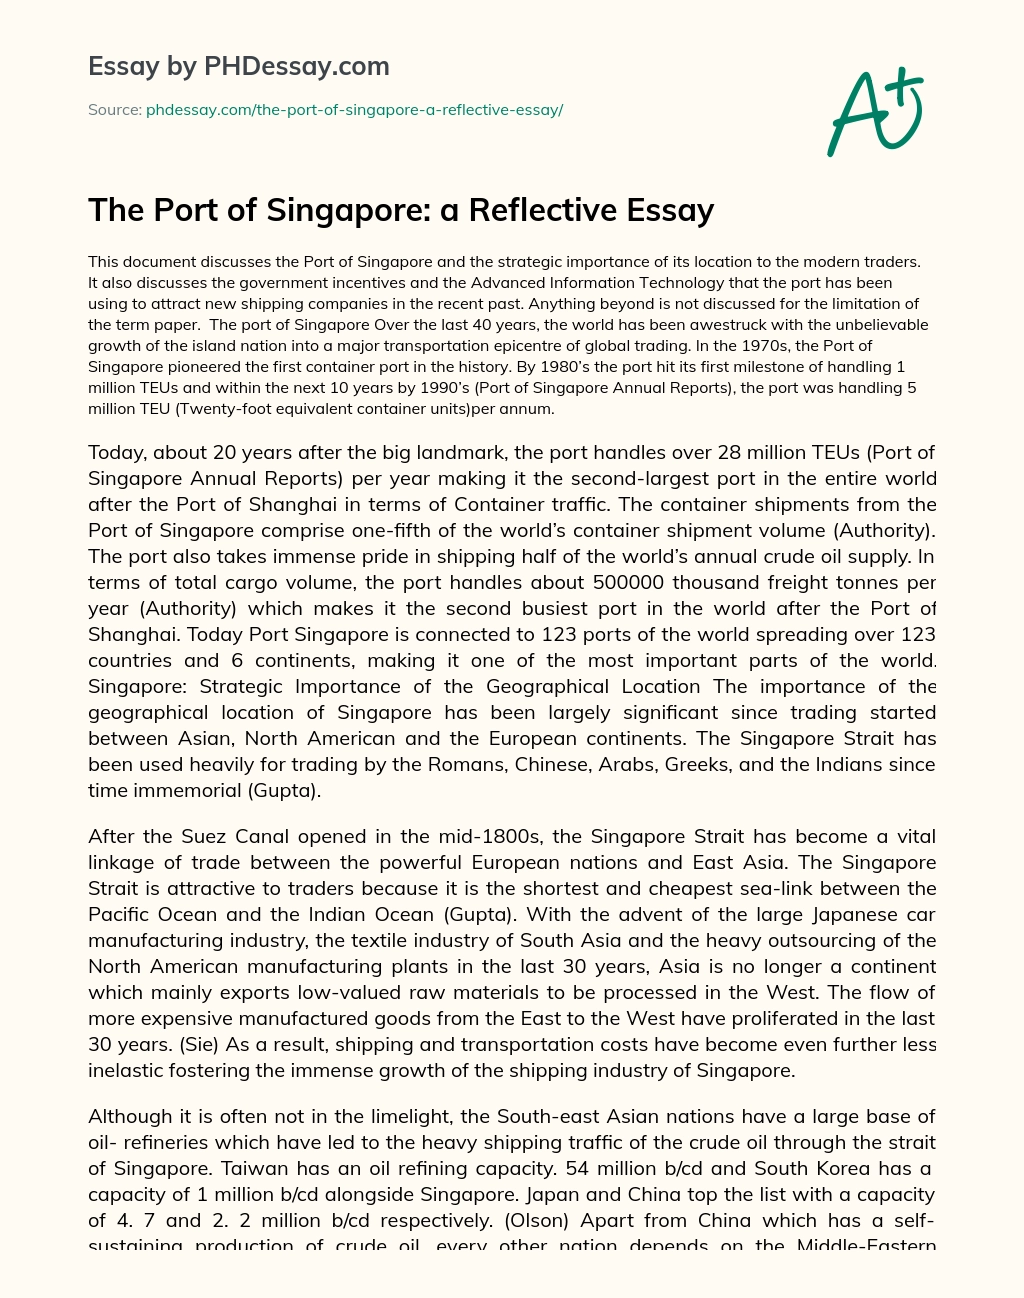 The Port of Singapore: a Reflective Essay essay